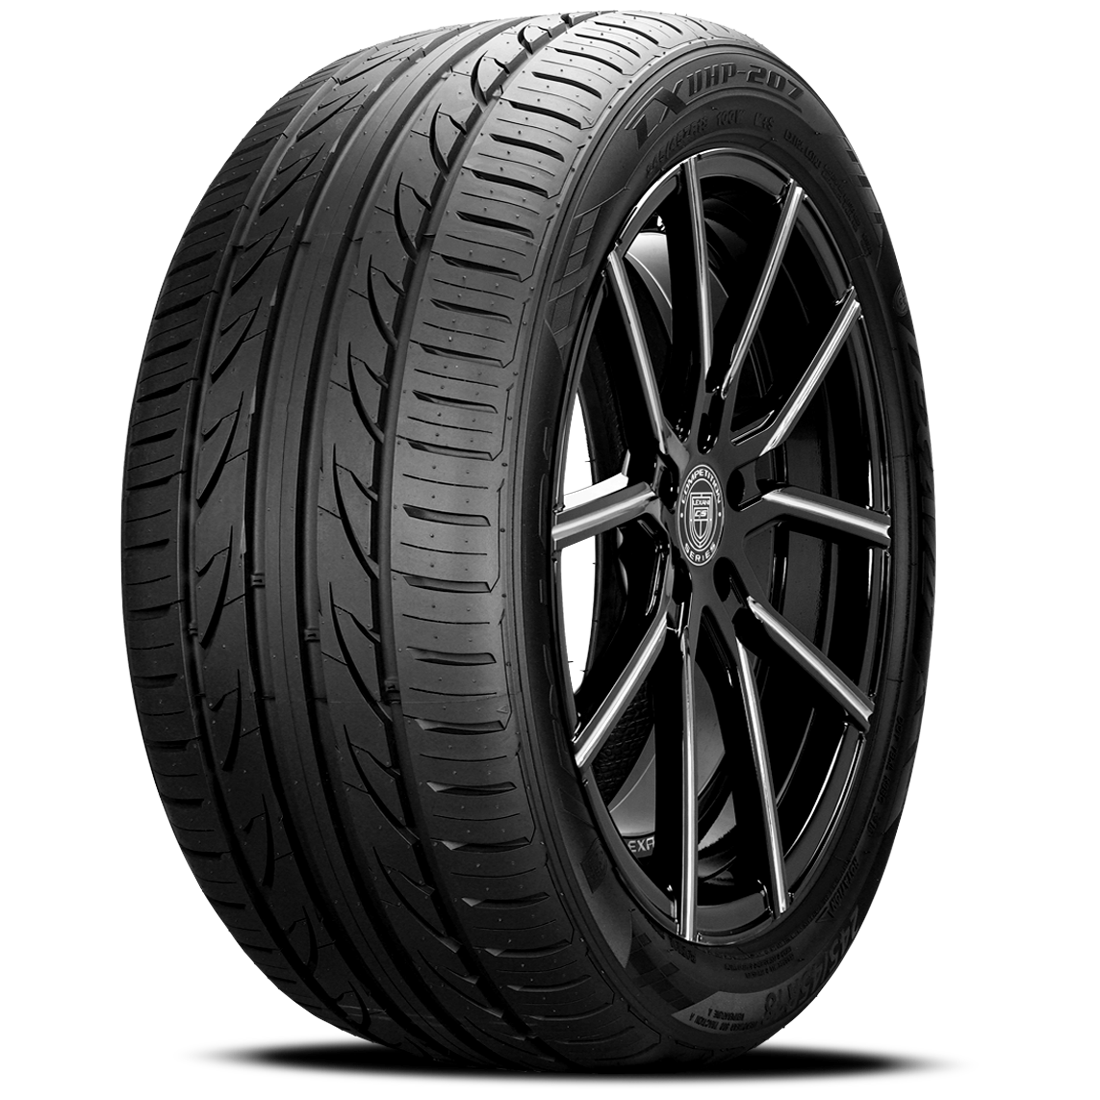 LEXANI LXUHP-207 235/40ZR18 (25.4X9.3R 18) Tires